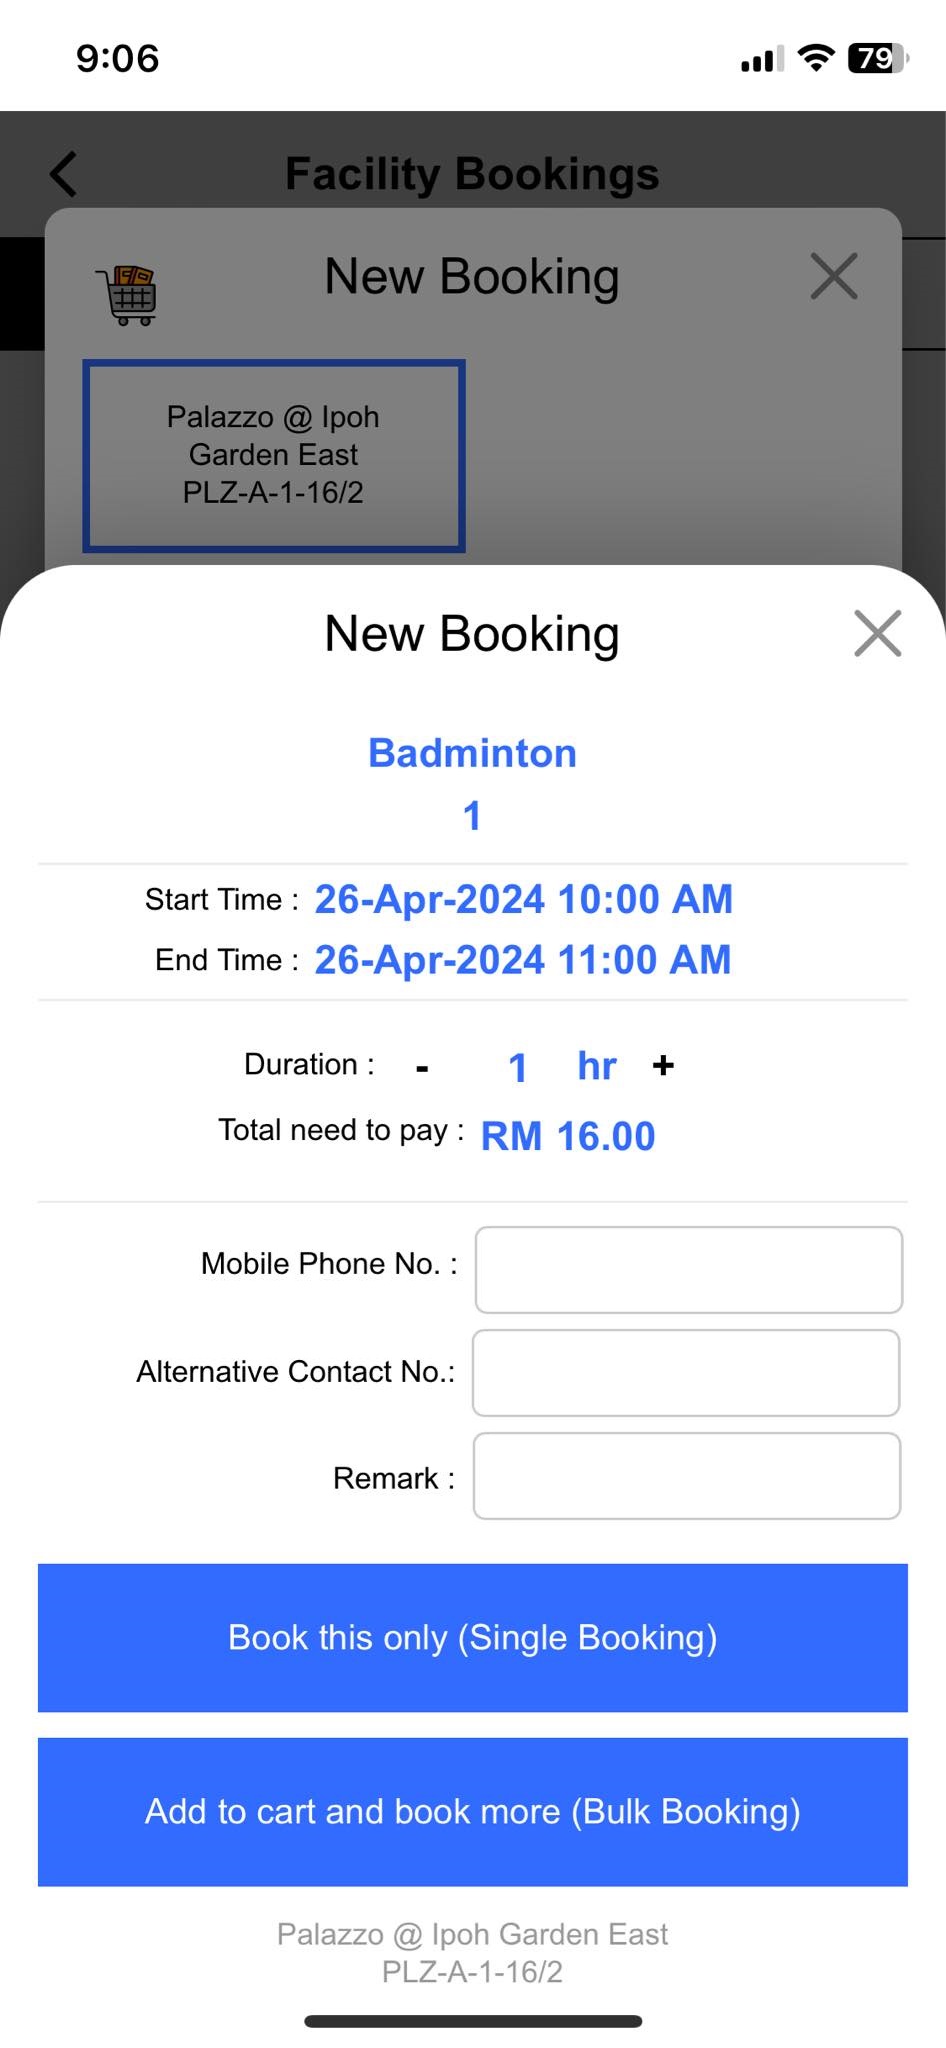 Facility Bookings App - Select Single Booking or Bulk Booking